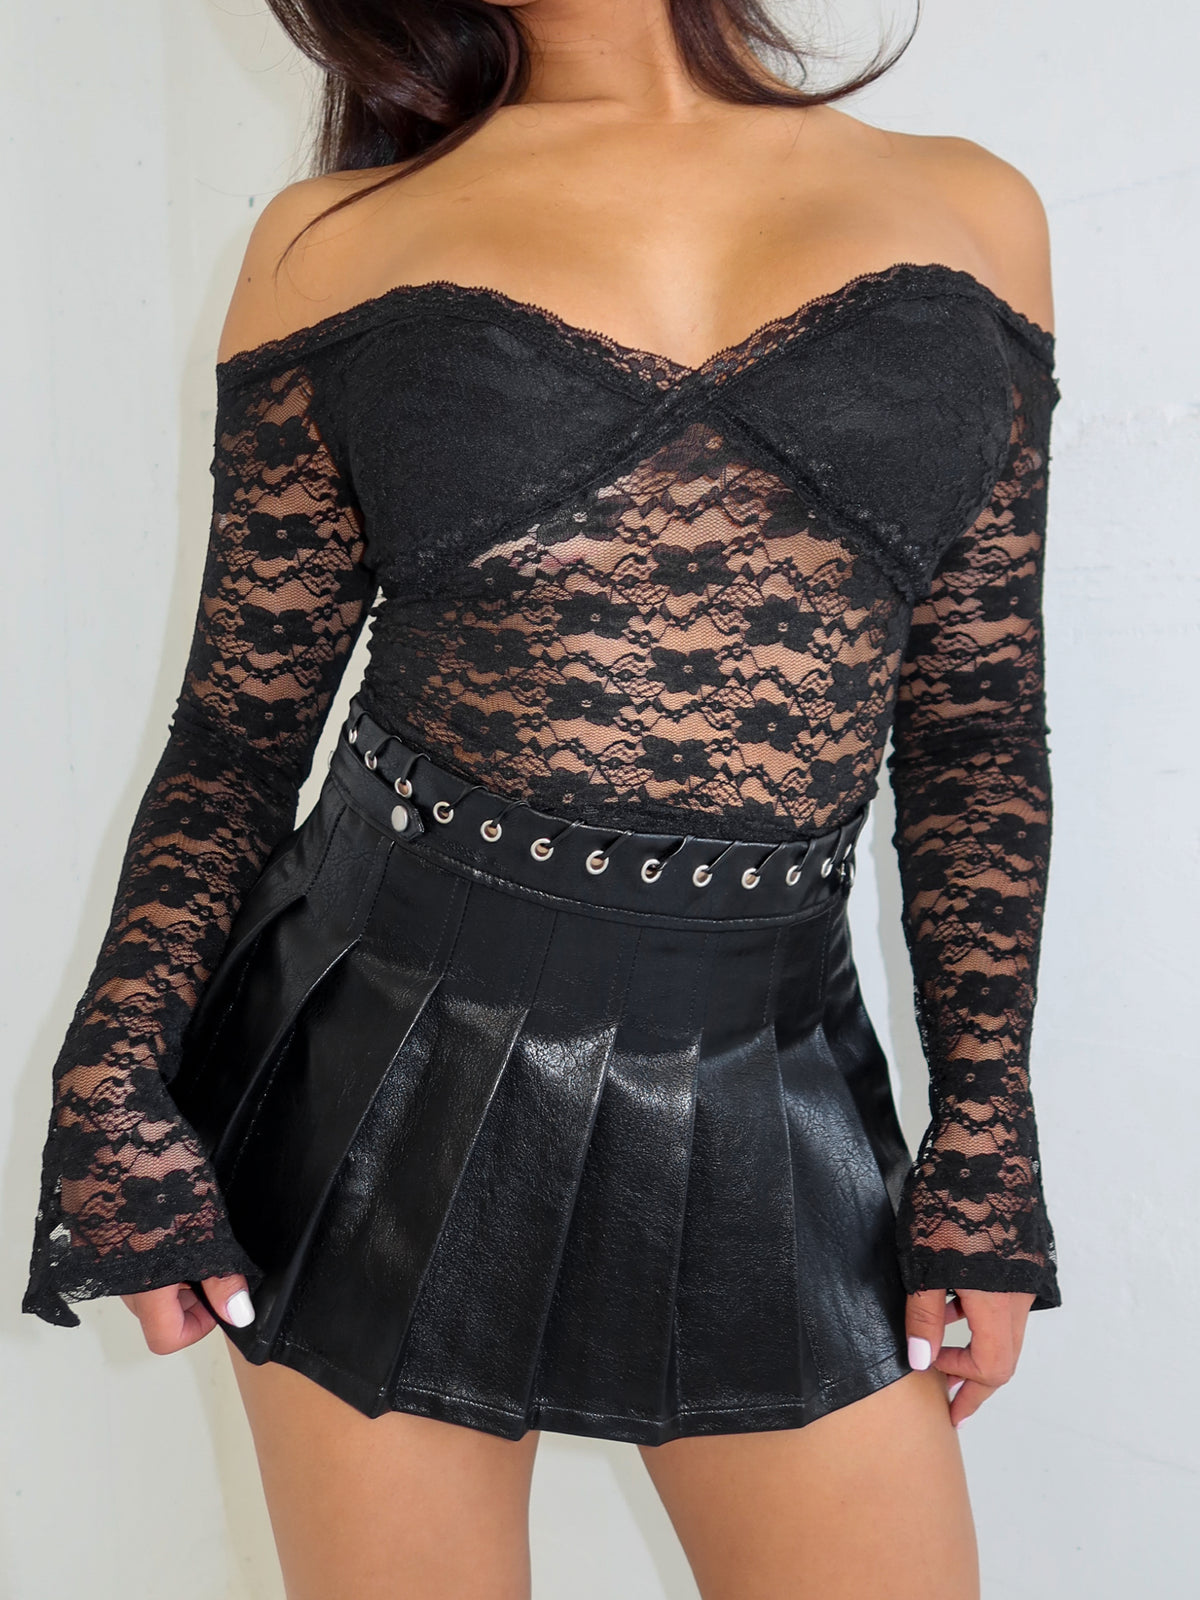 Veronica Leather Skirt (Black)